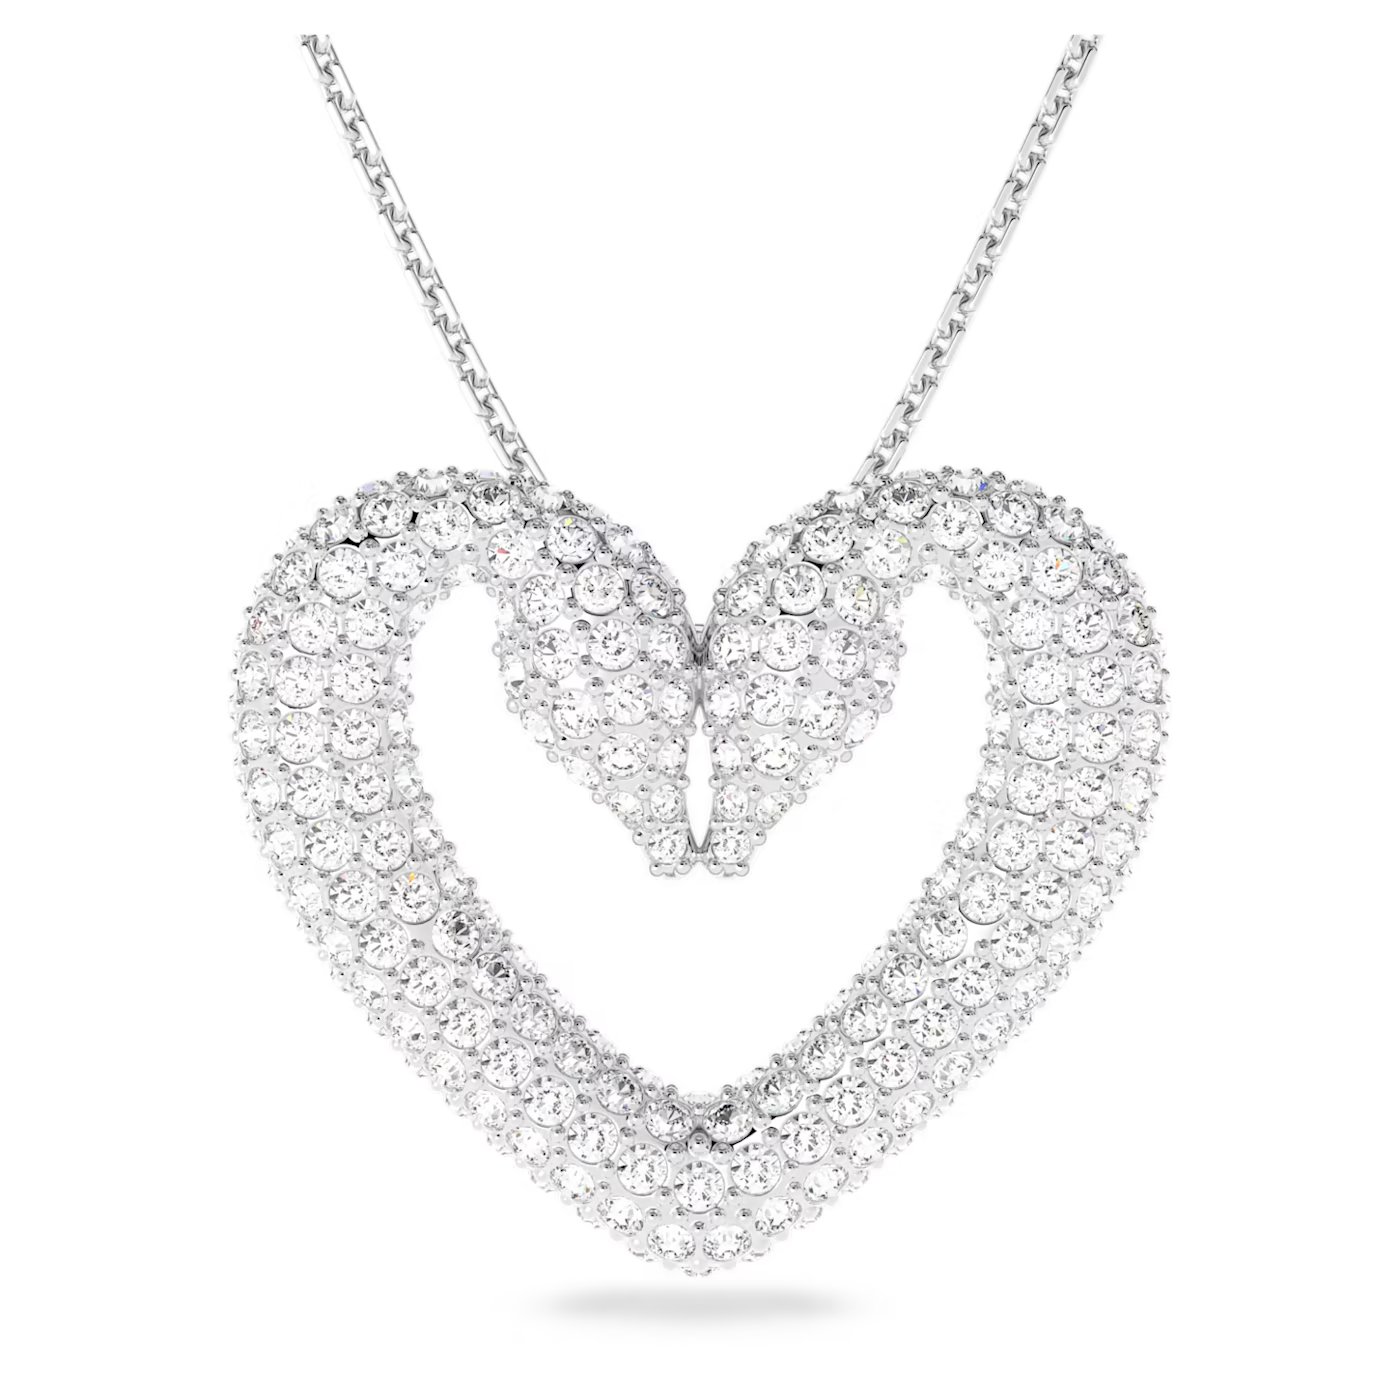 62f3bcec43eba_px-una-pendant--heart--medium--white--rhodium-plated-swarovski-5626176.jpg